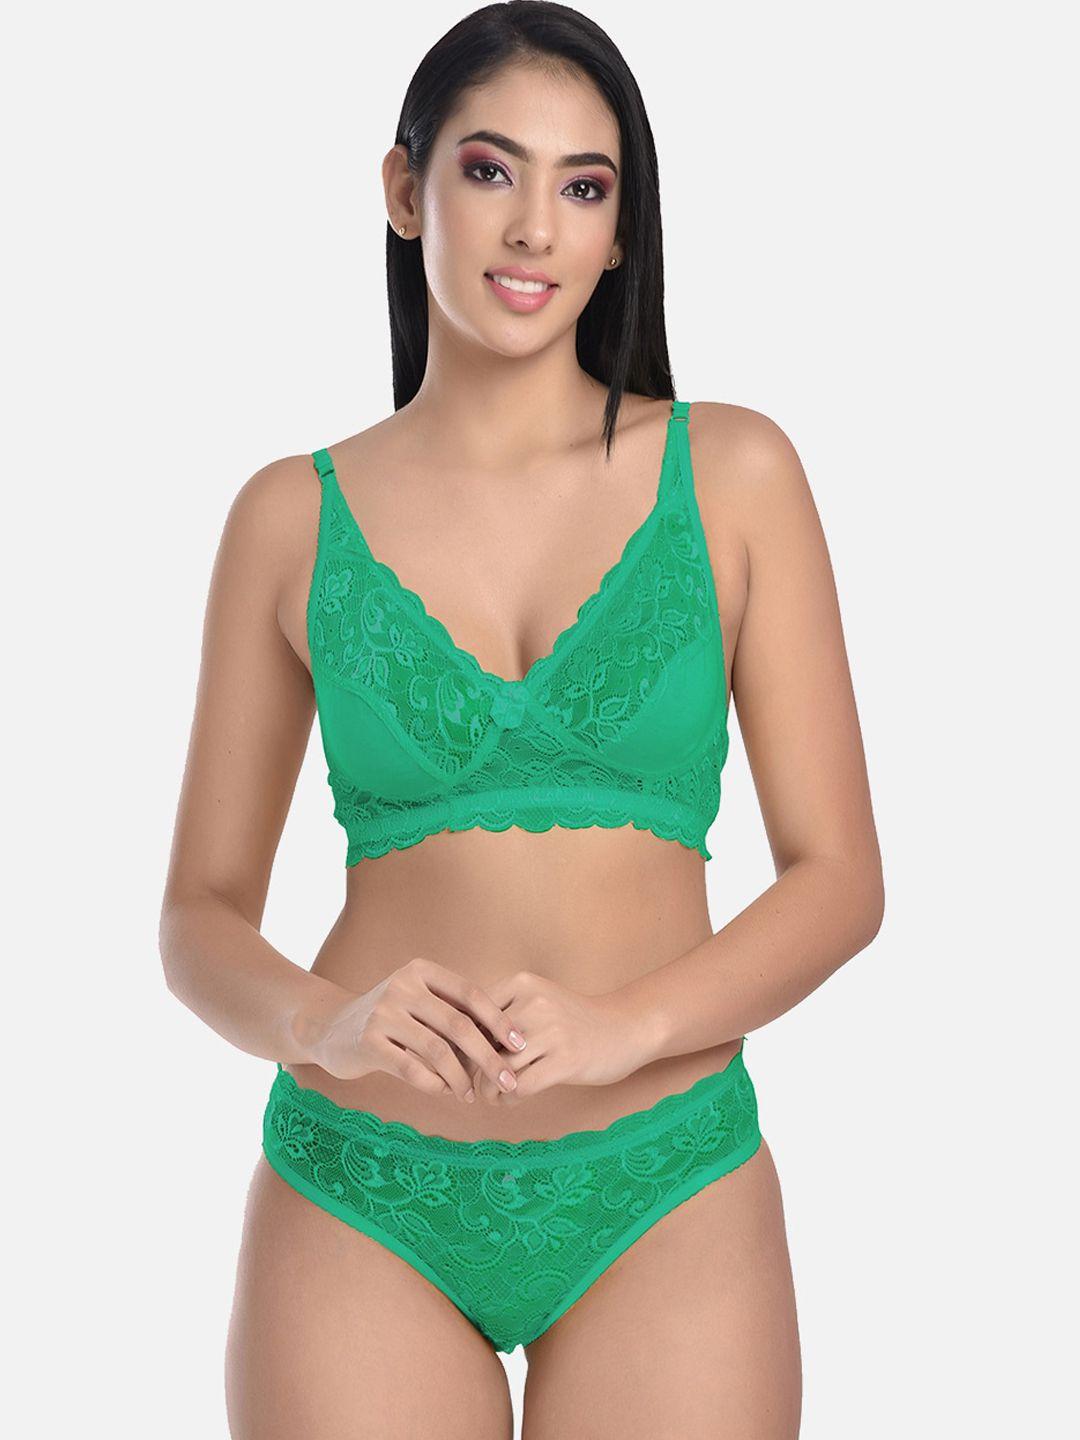 styfun self-designed lingerie set vm_ei-ten_green_b